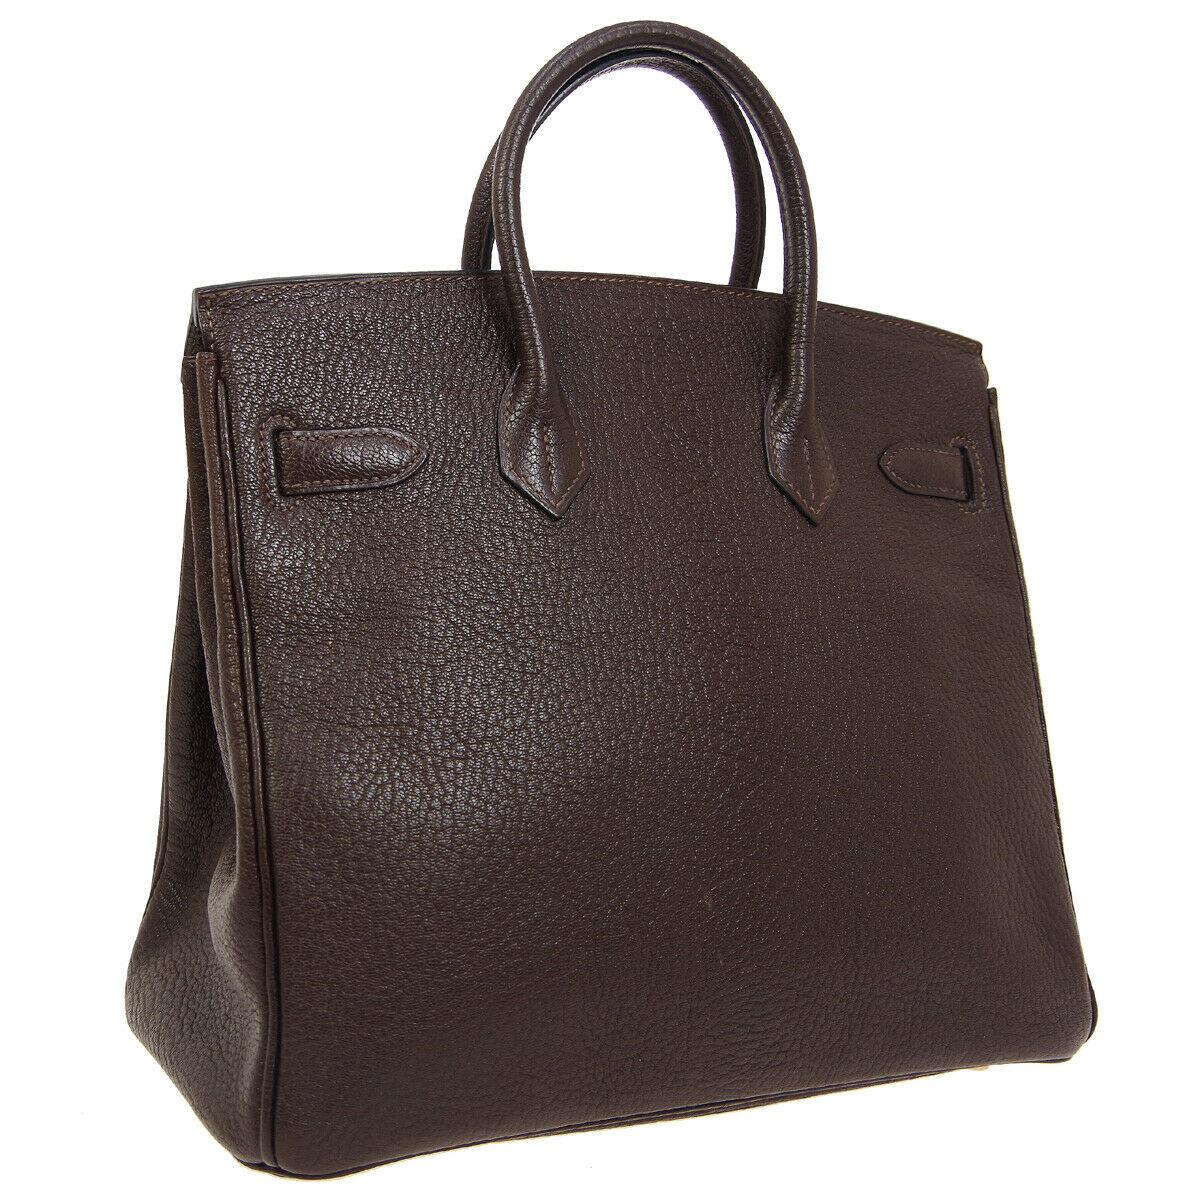 Black Hermes HAC 32 Dark Chocolate Leather Gold Carryall Travel Top Handle Tote Bag